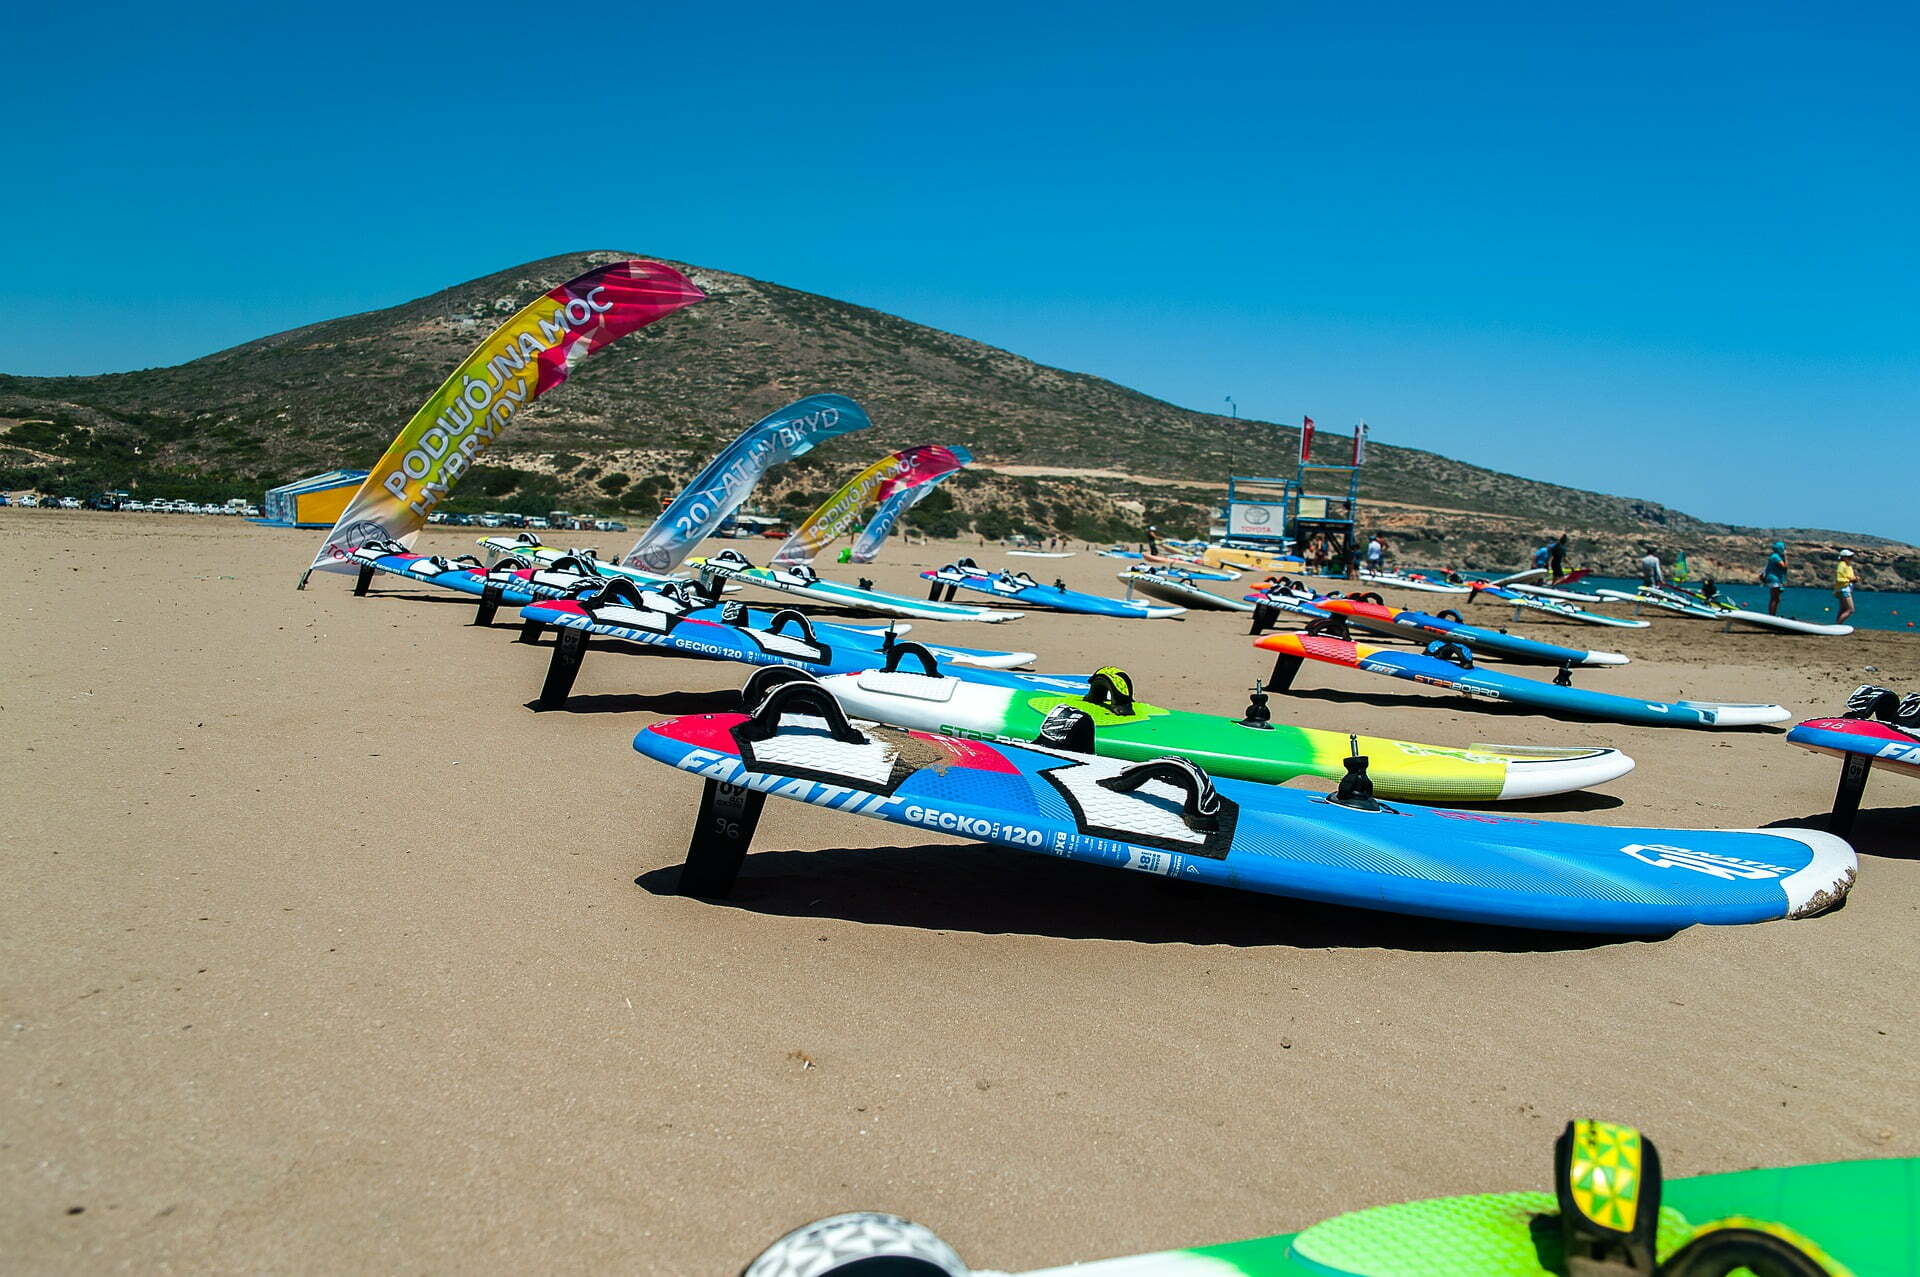 windsurf boards